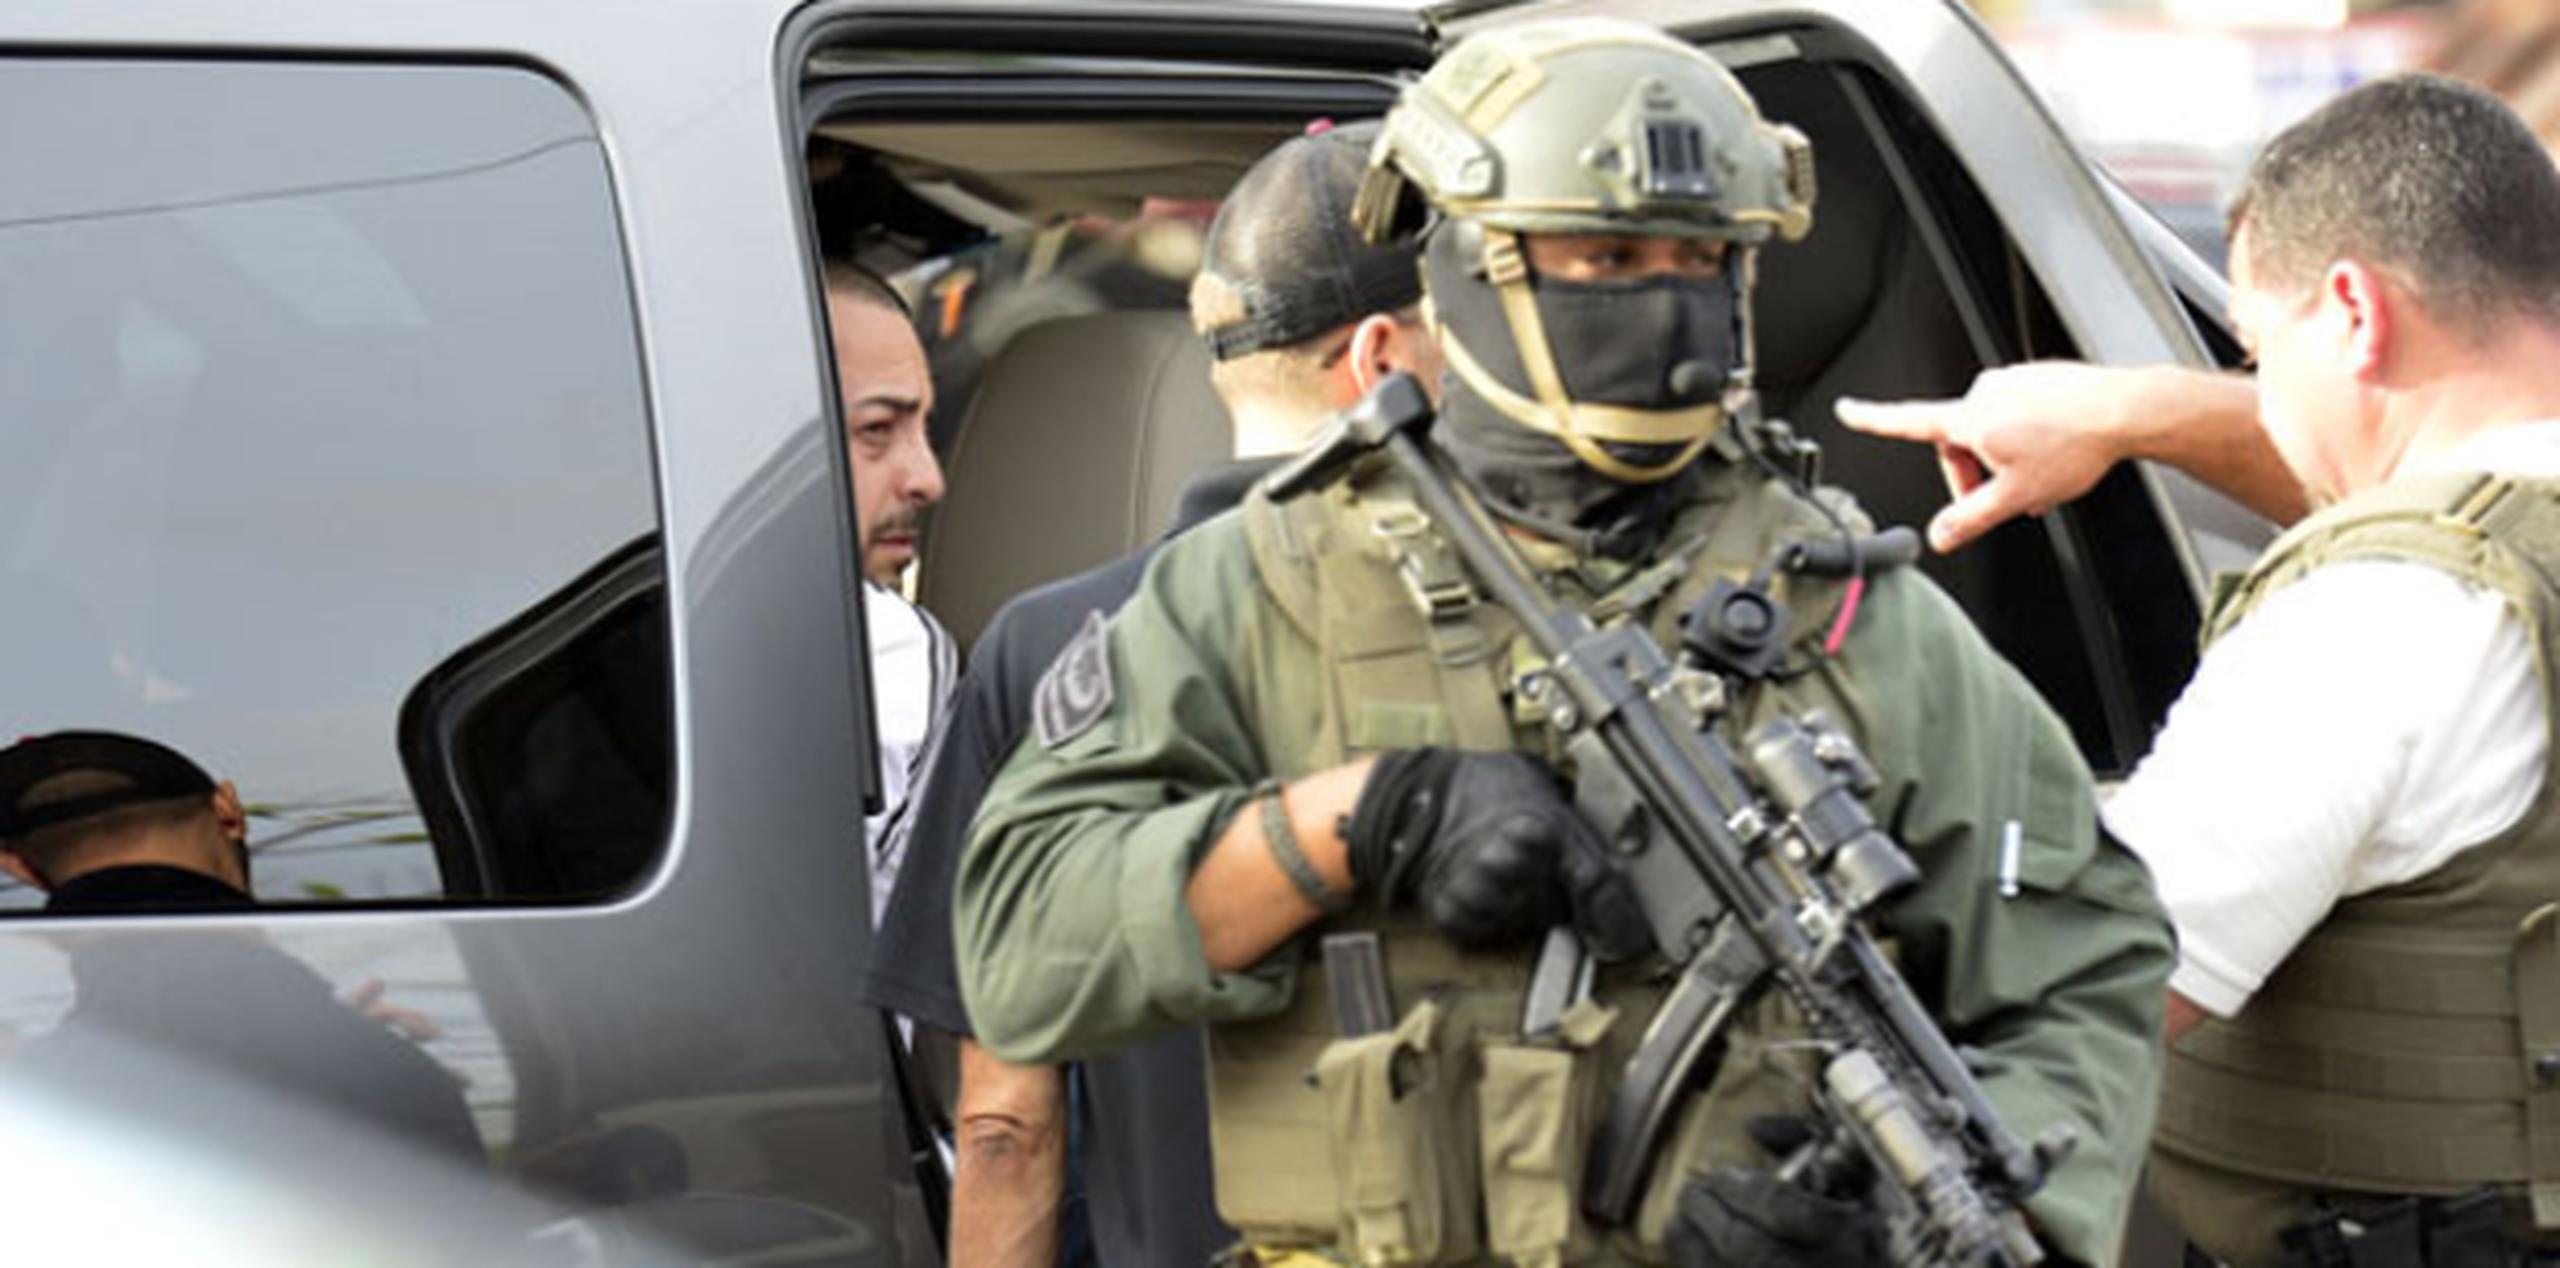 Intervención del FBI en la que se arrestó a Ramón Carnal Molina. (gerard.lopez@gfrmedia.com)